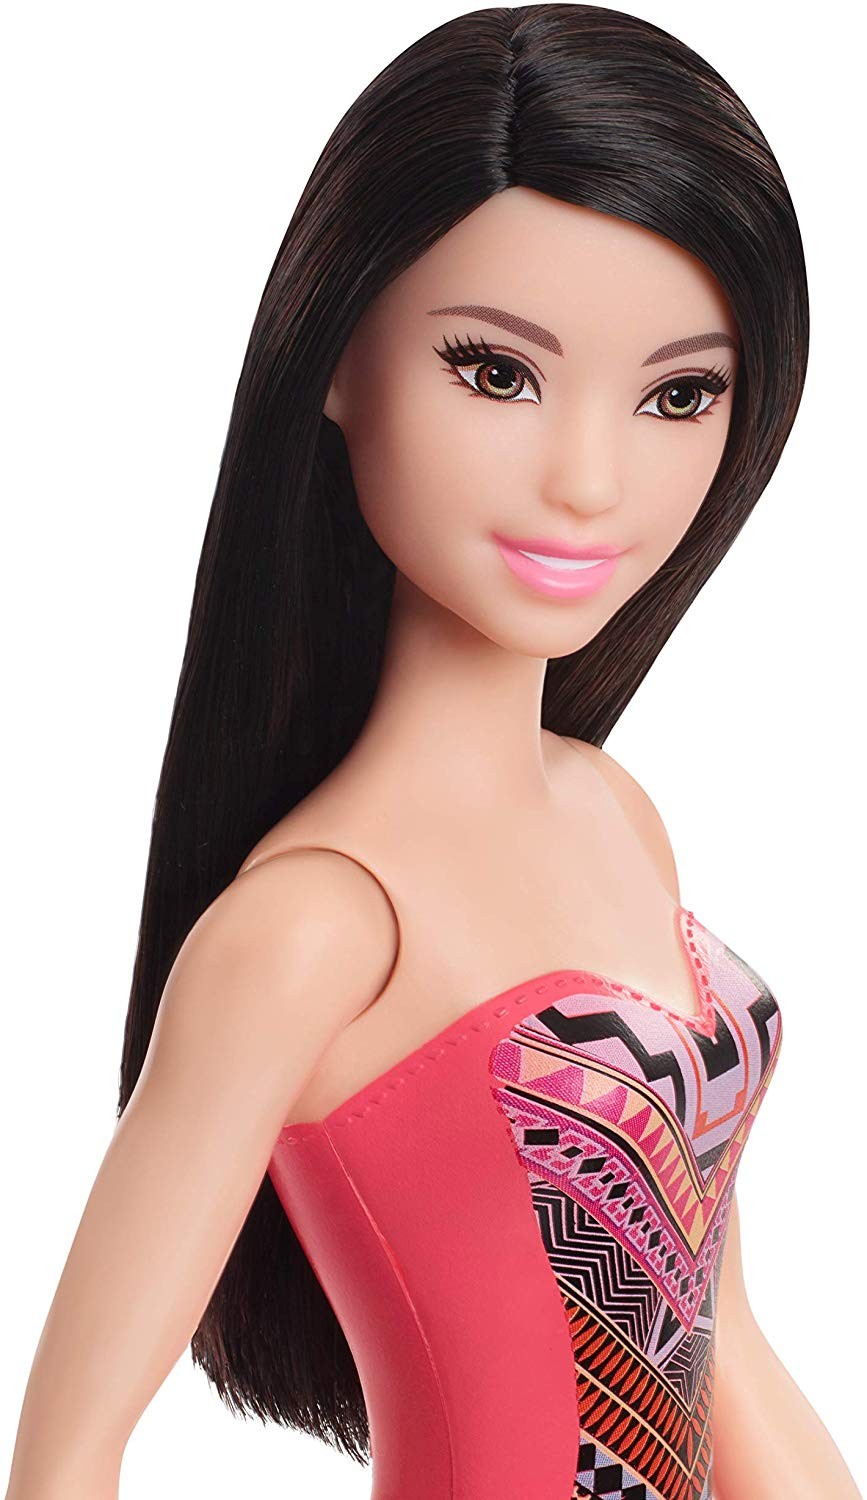 Black haired barbie